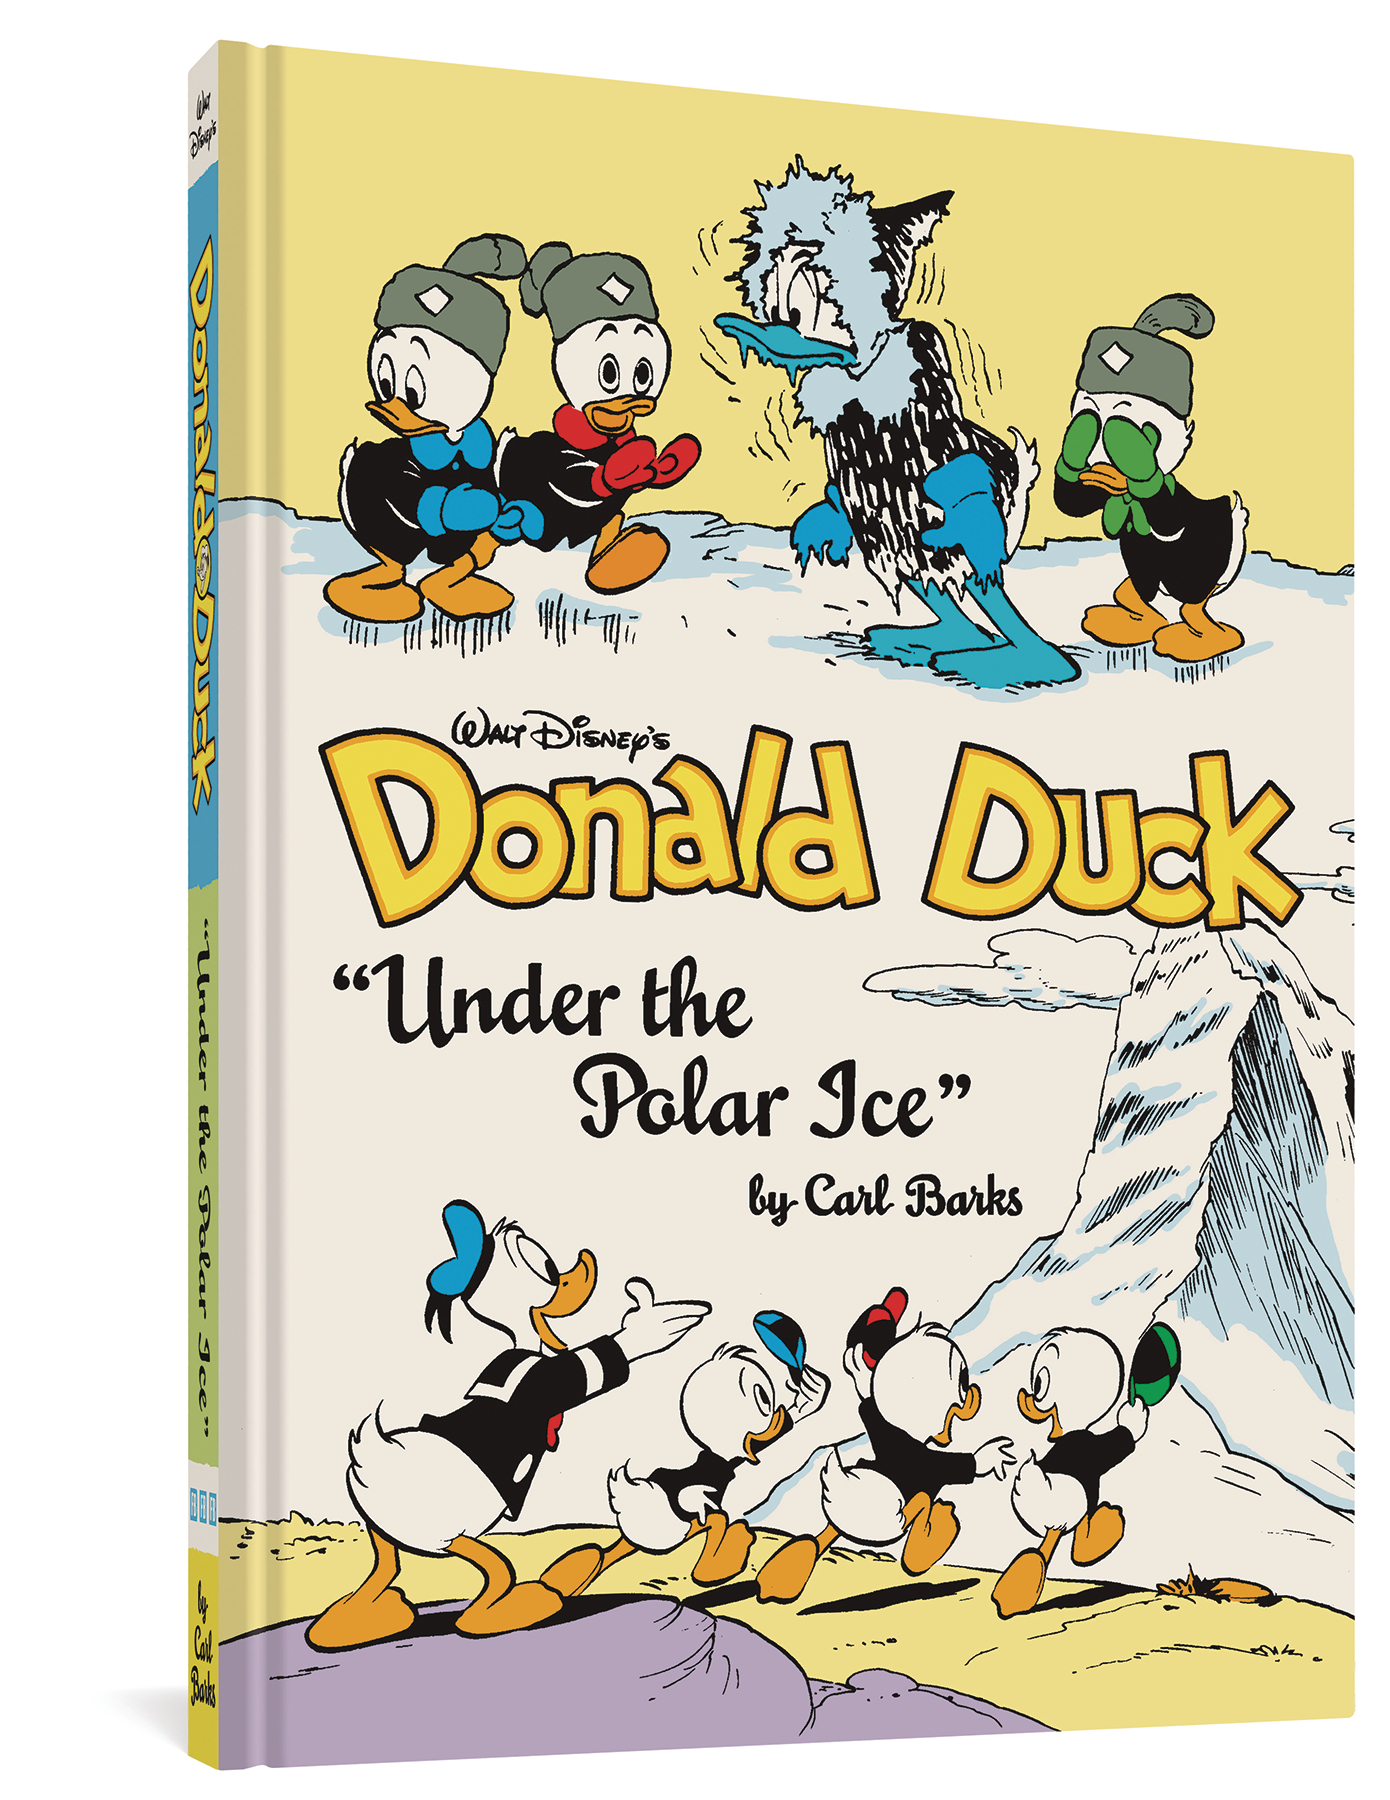 Complete Carl Barks Disney Library Hardcover Volume 23 Walt Disney's Donald Duck Under The Polar Ice